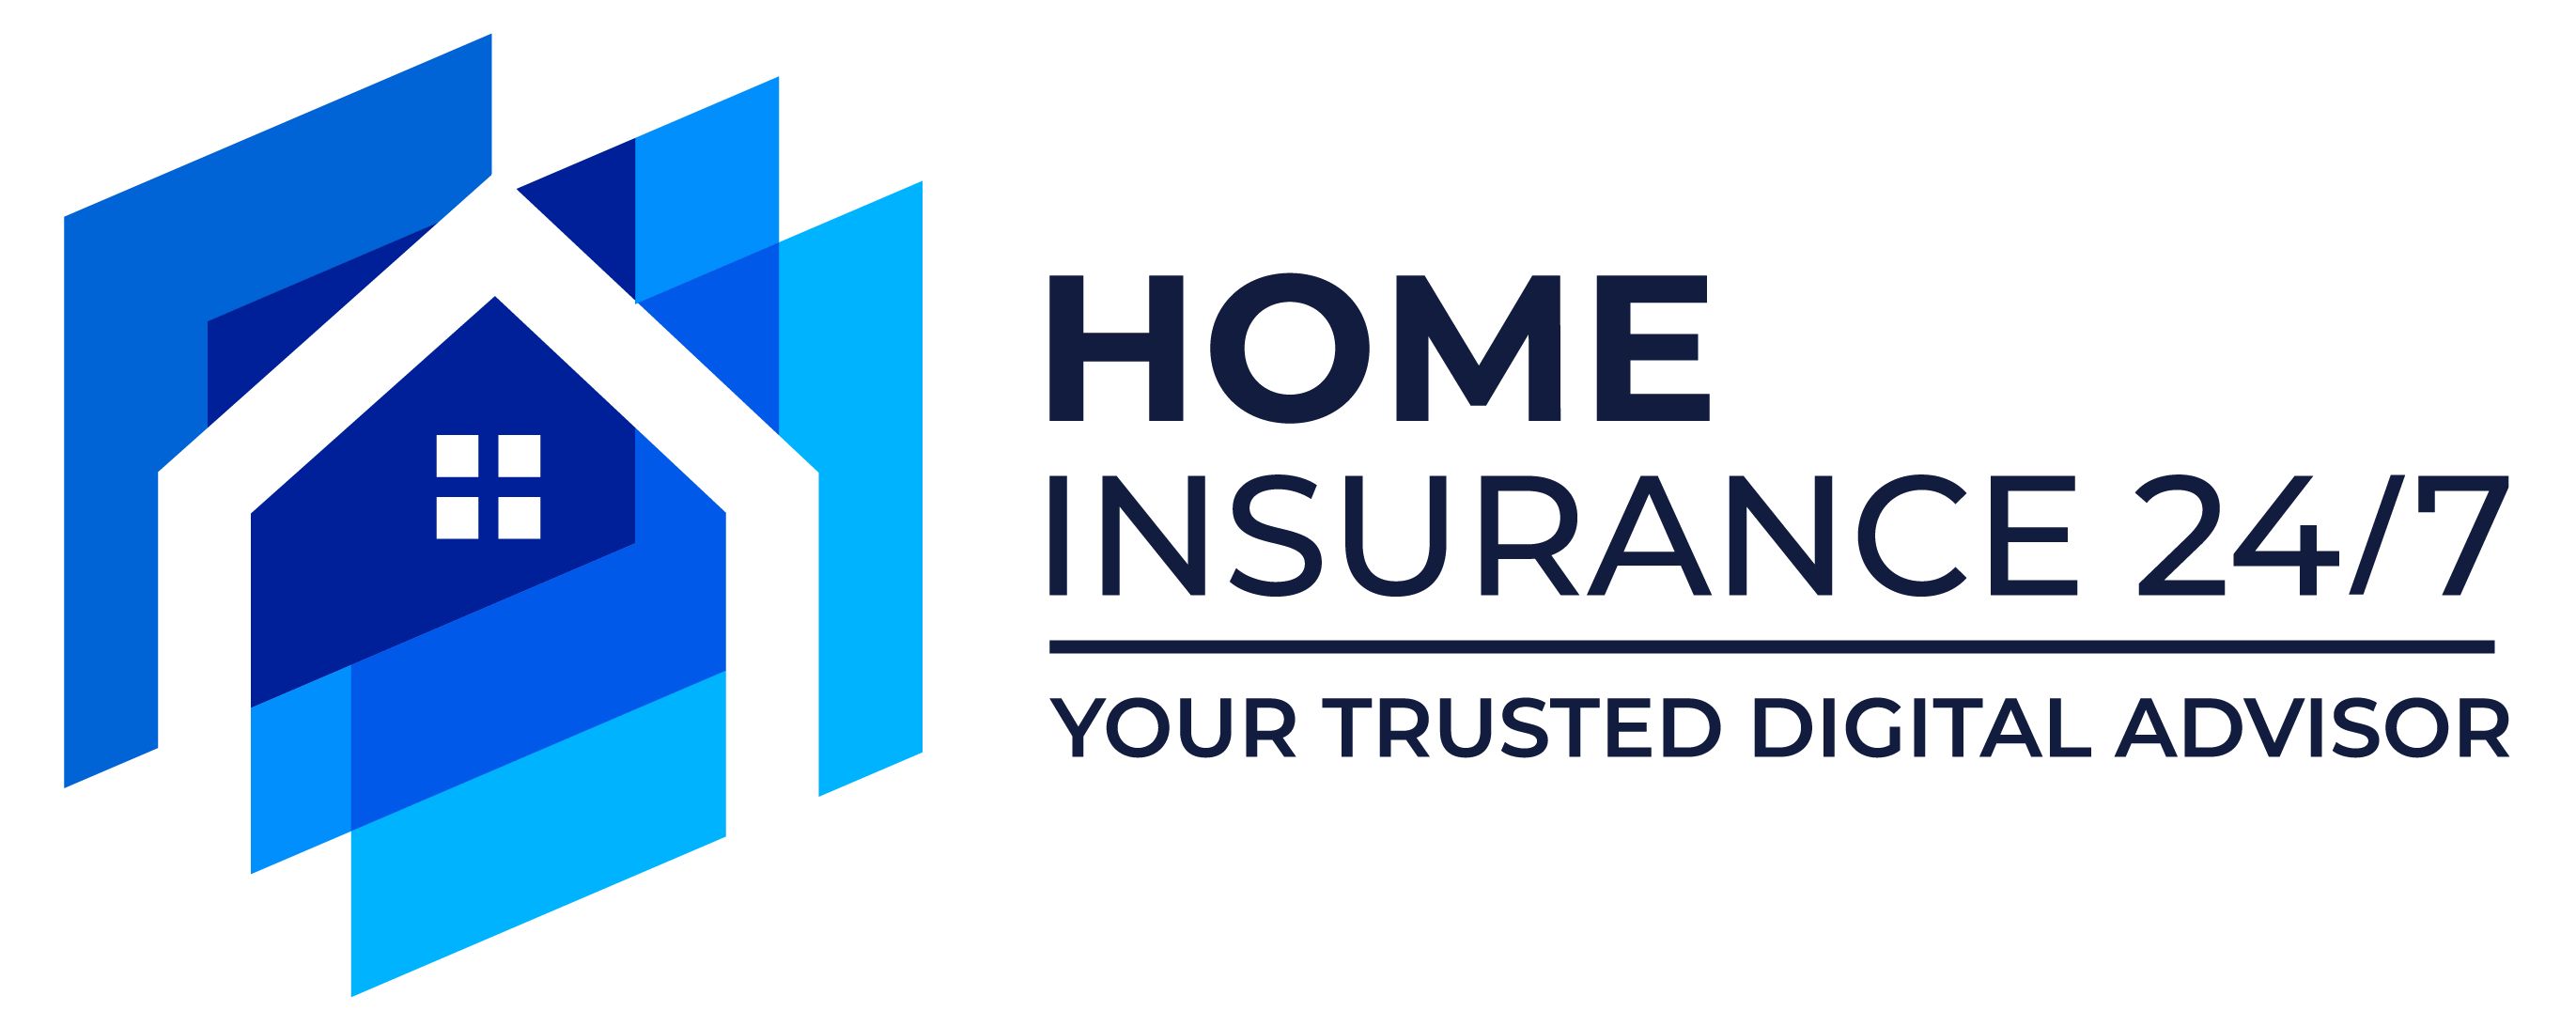 Home Insurance 247